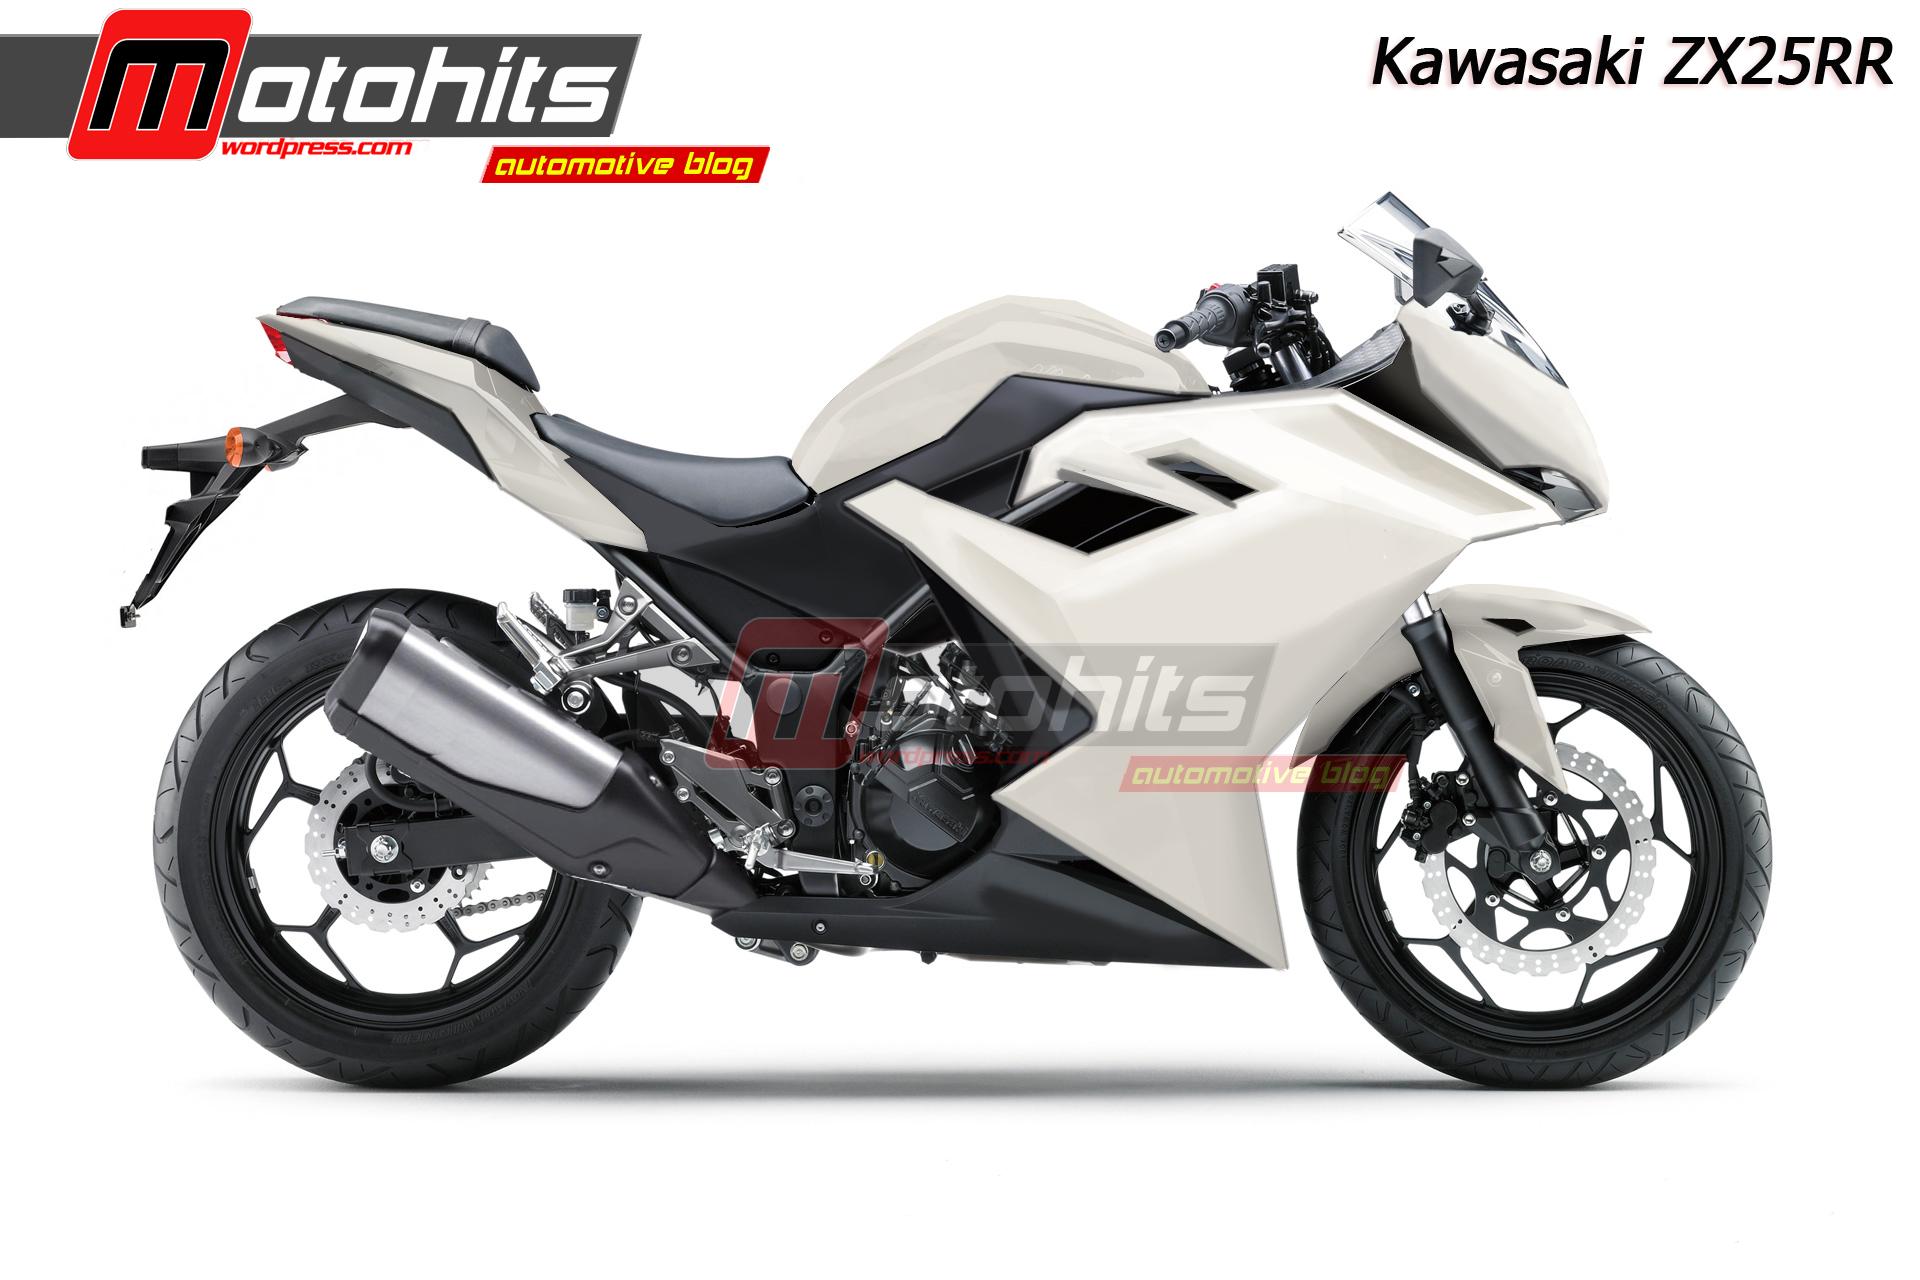 Rendering The Next Kawasaki Ninja 250 Fi Zx25rr Motohits Com